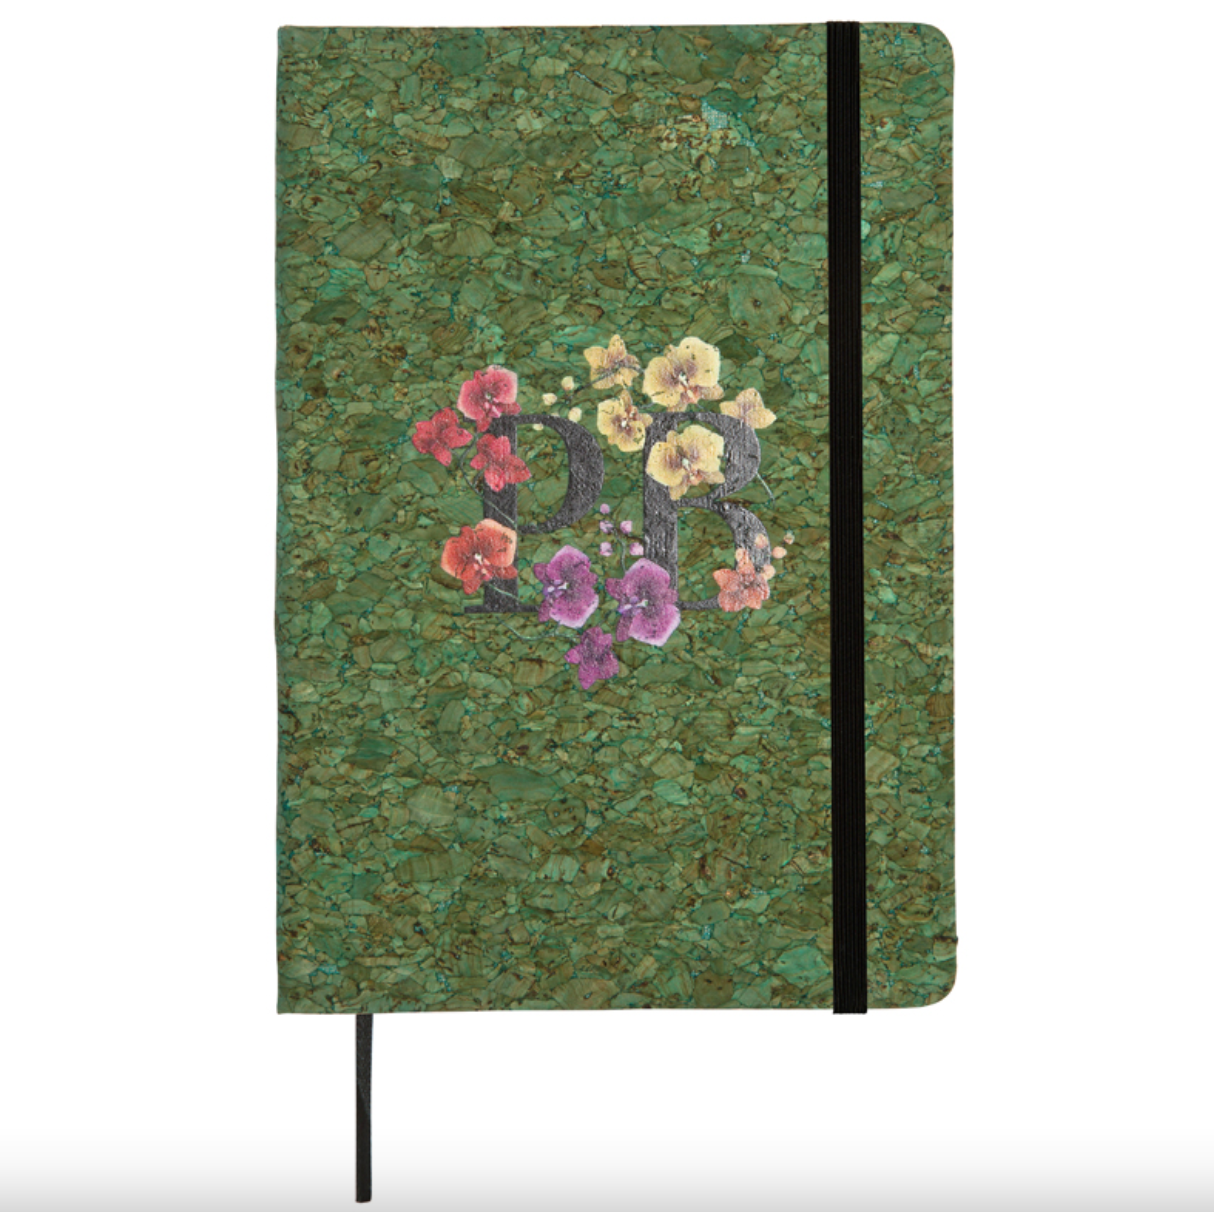 Caderno de cortiça Orchid: caderno ecológico com design de orquídea para amantes da natureza, estudantes, escritores e veganos